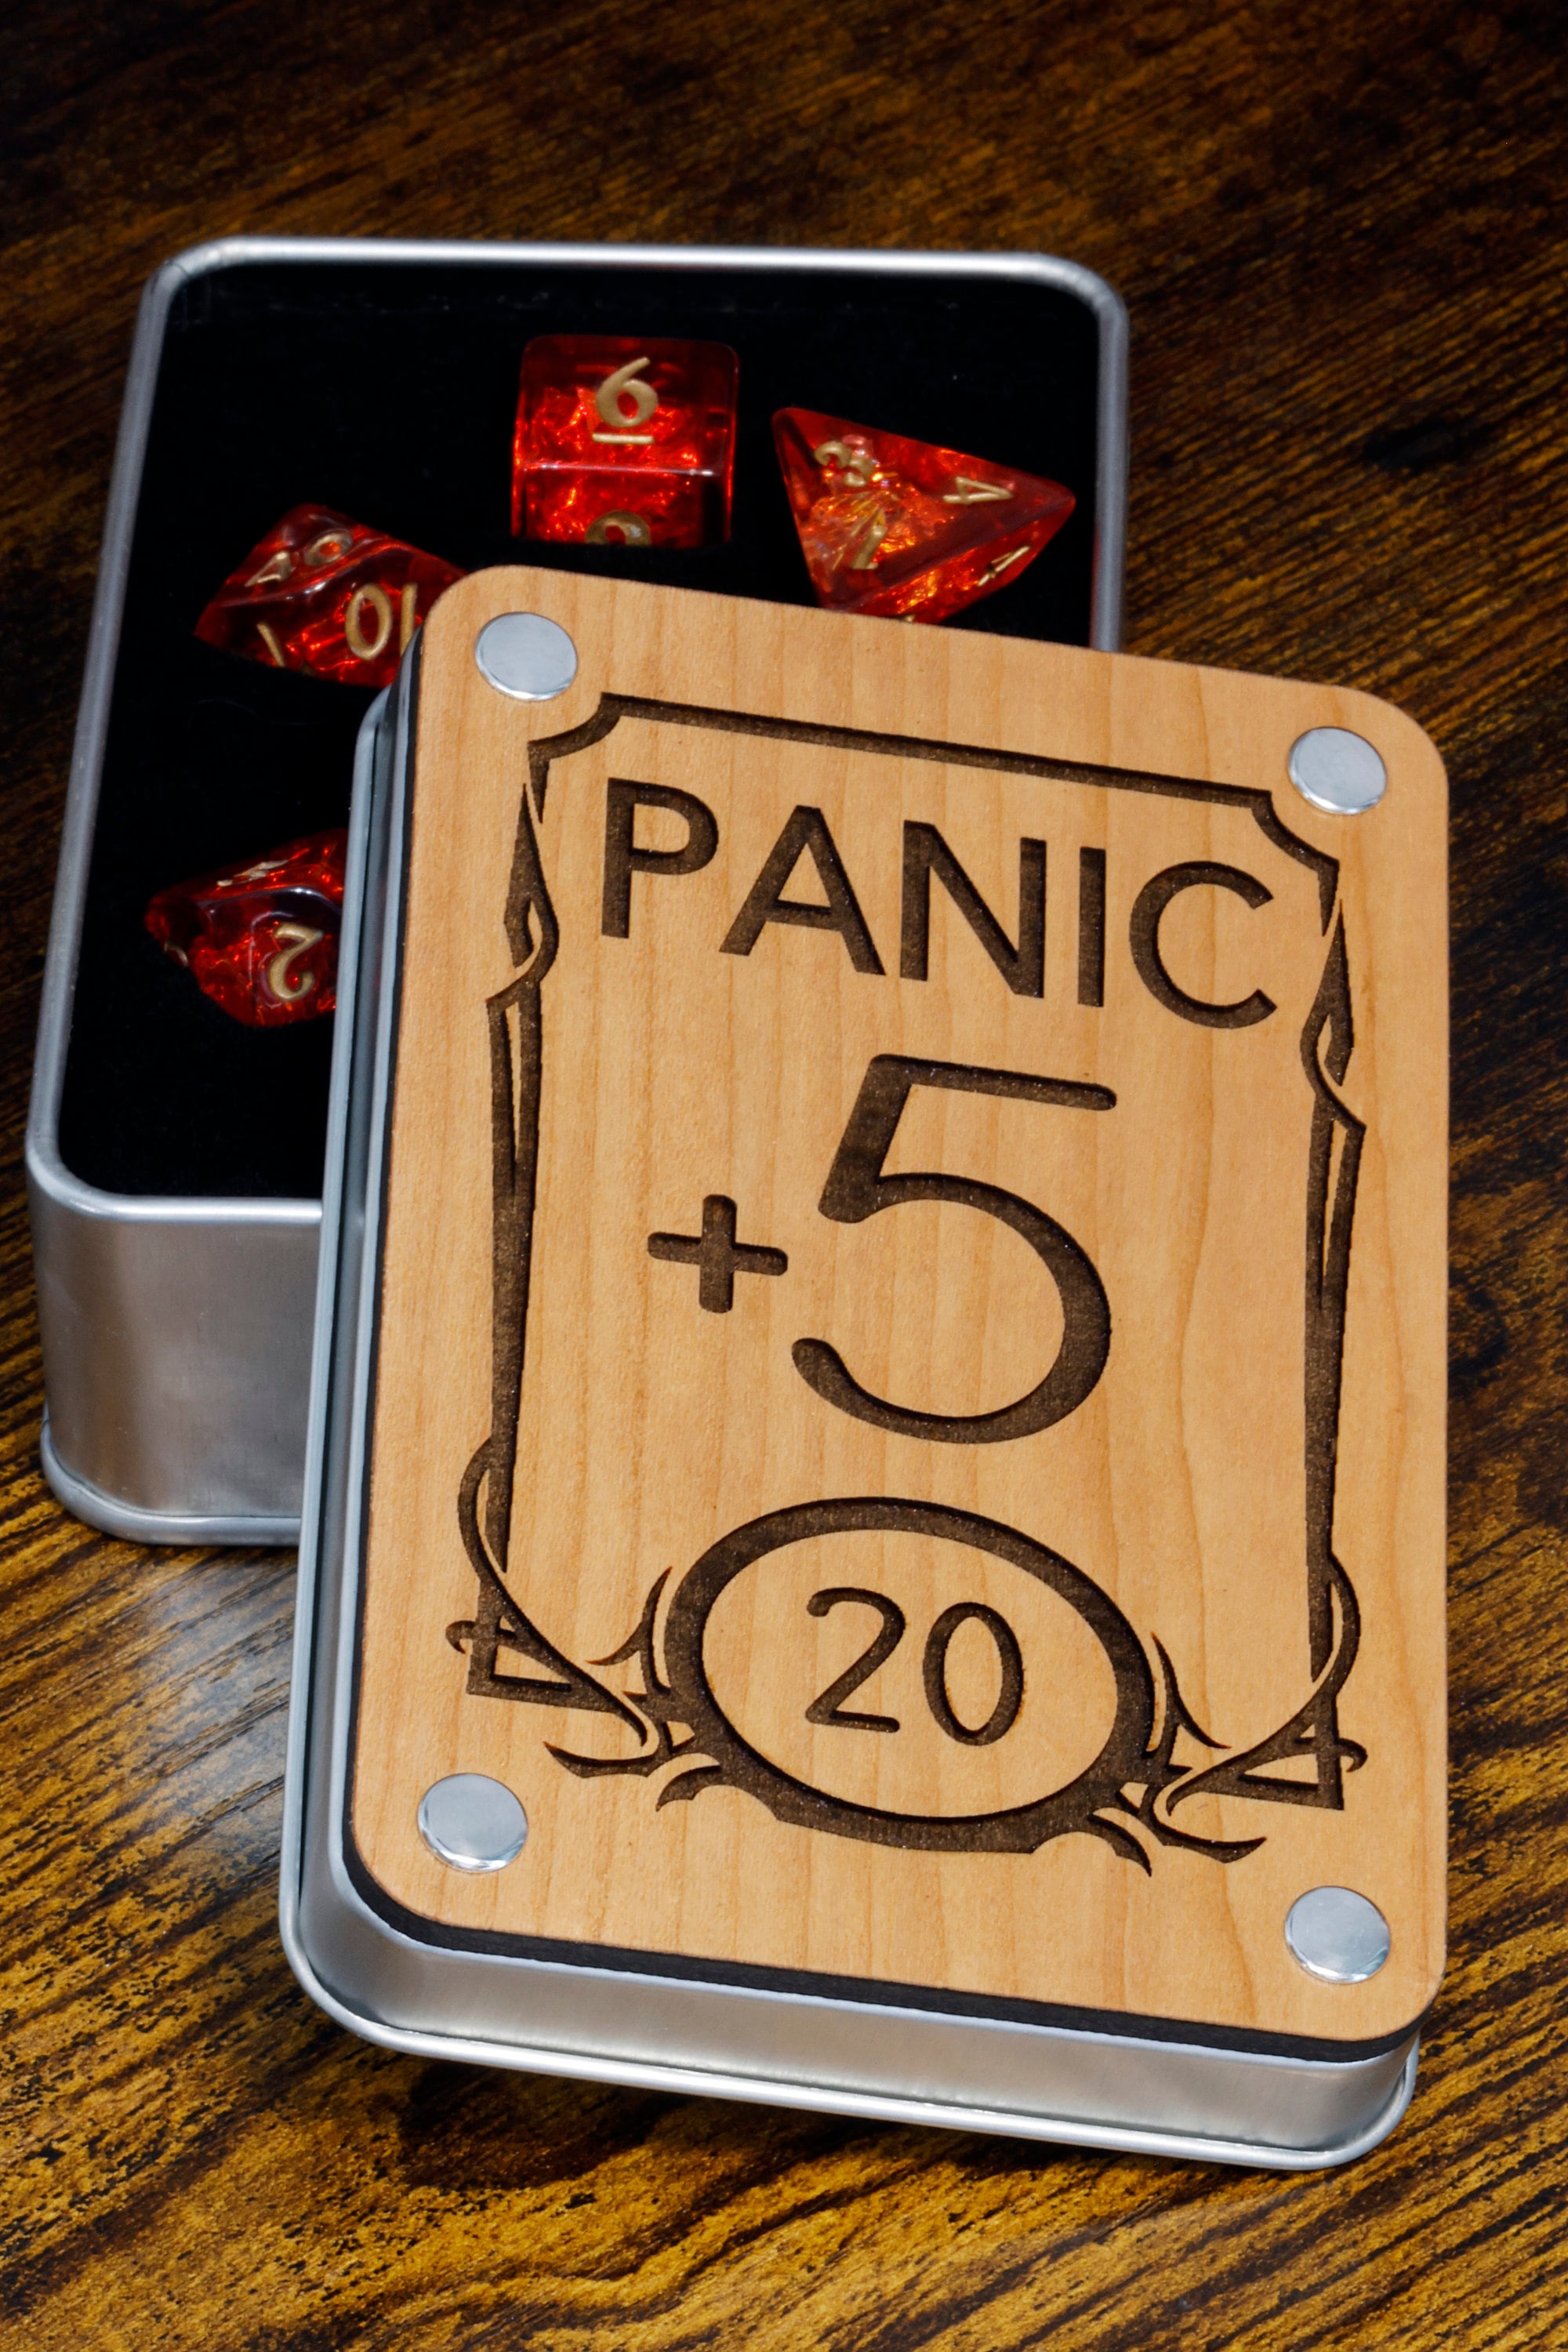 Panic Dice box and Fire Opal dice set